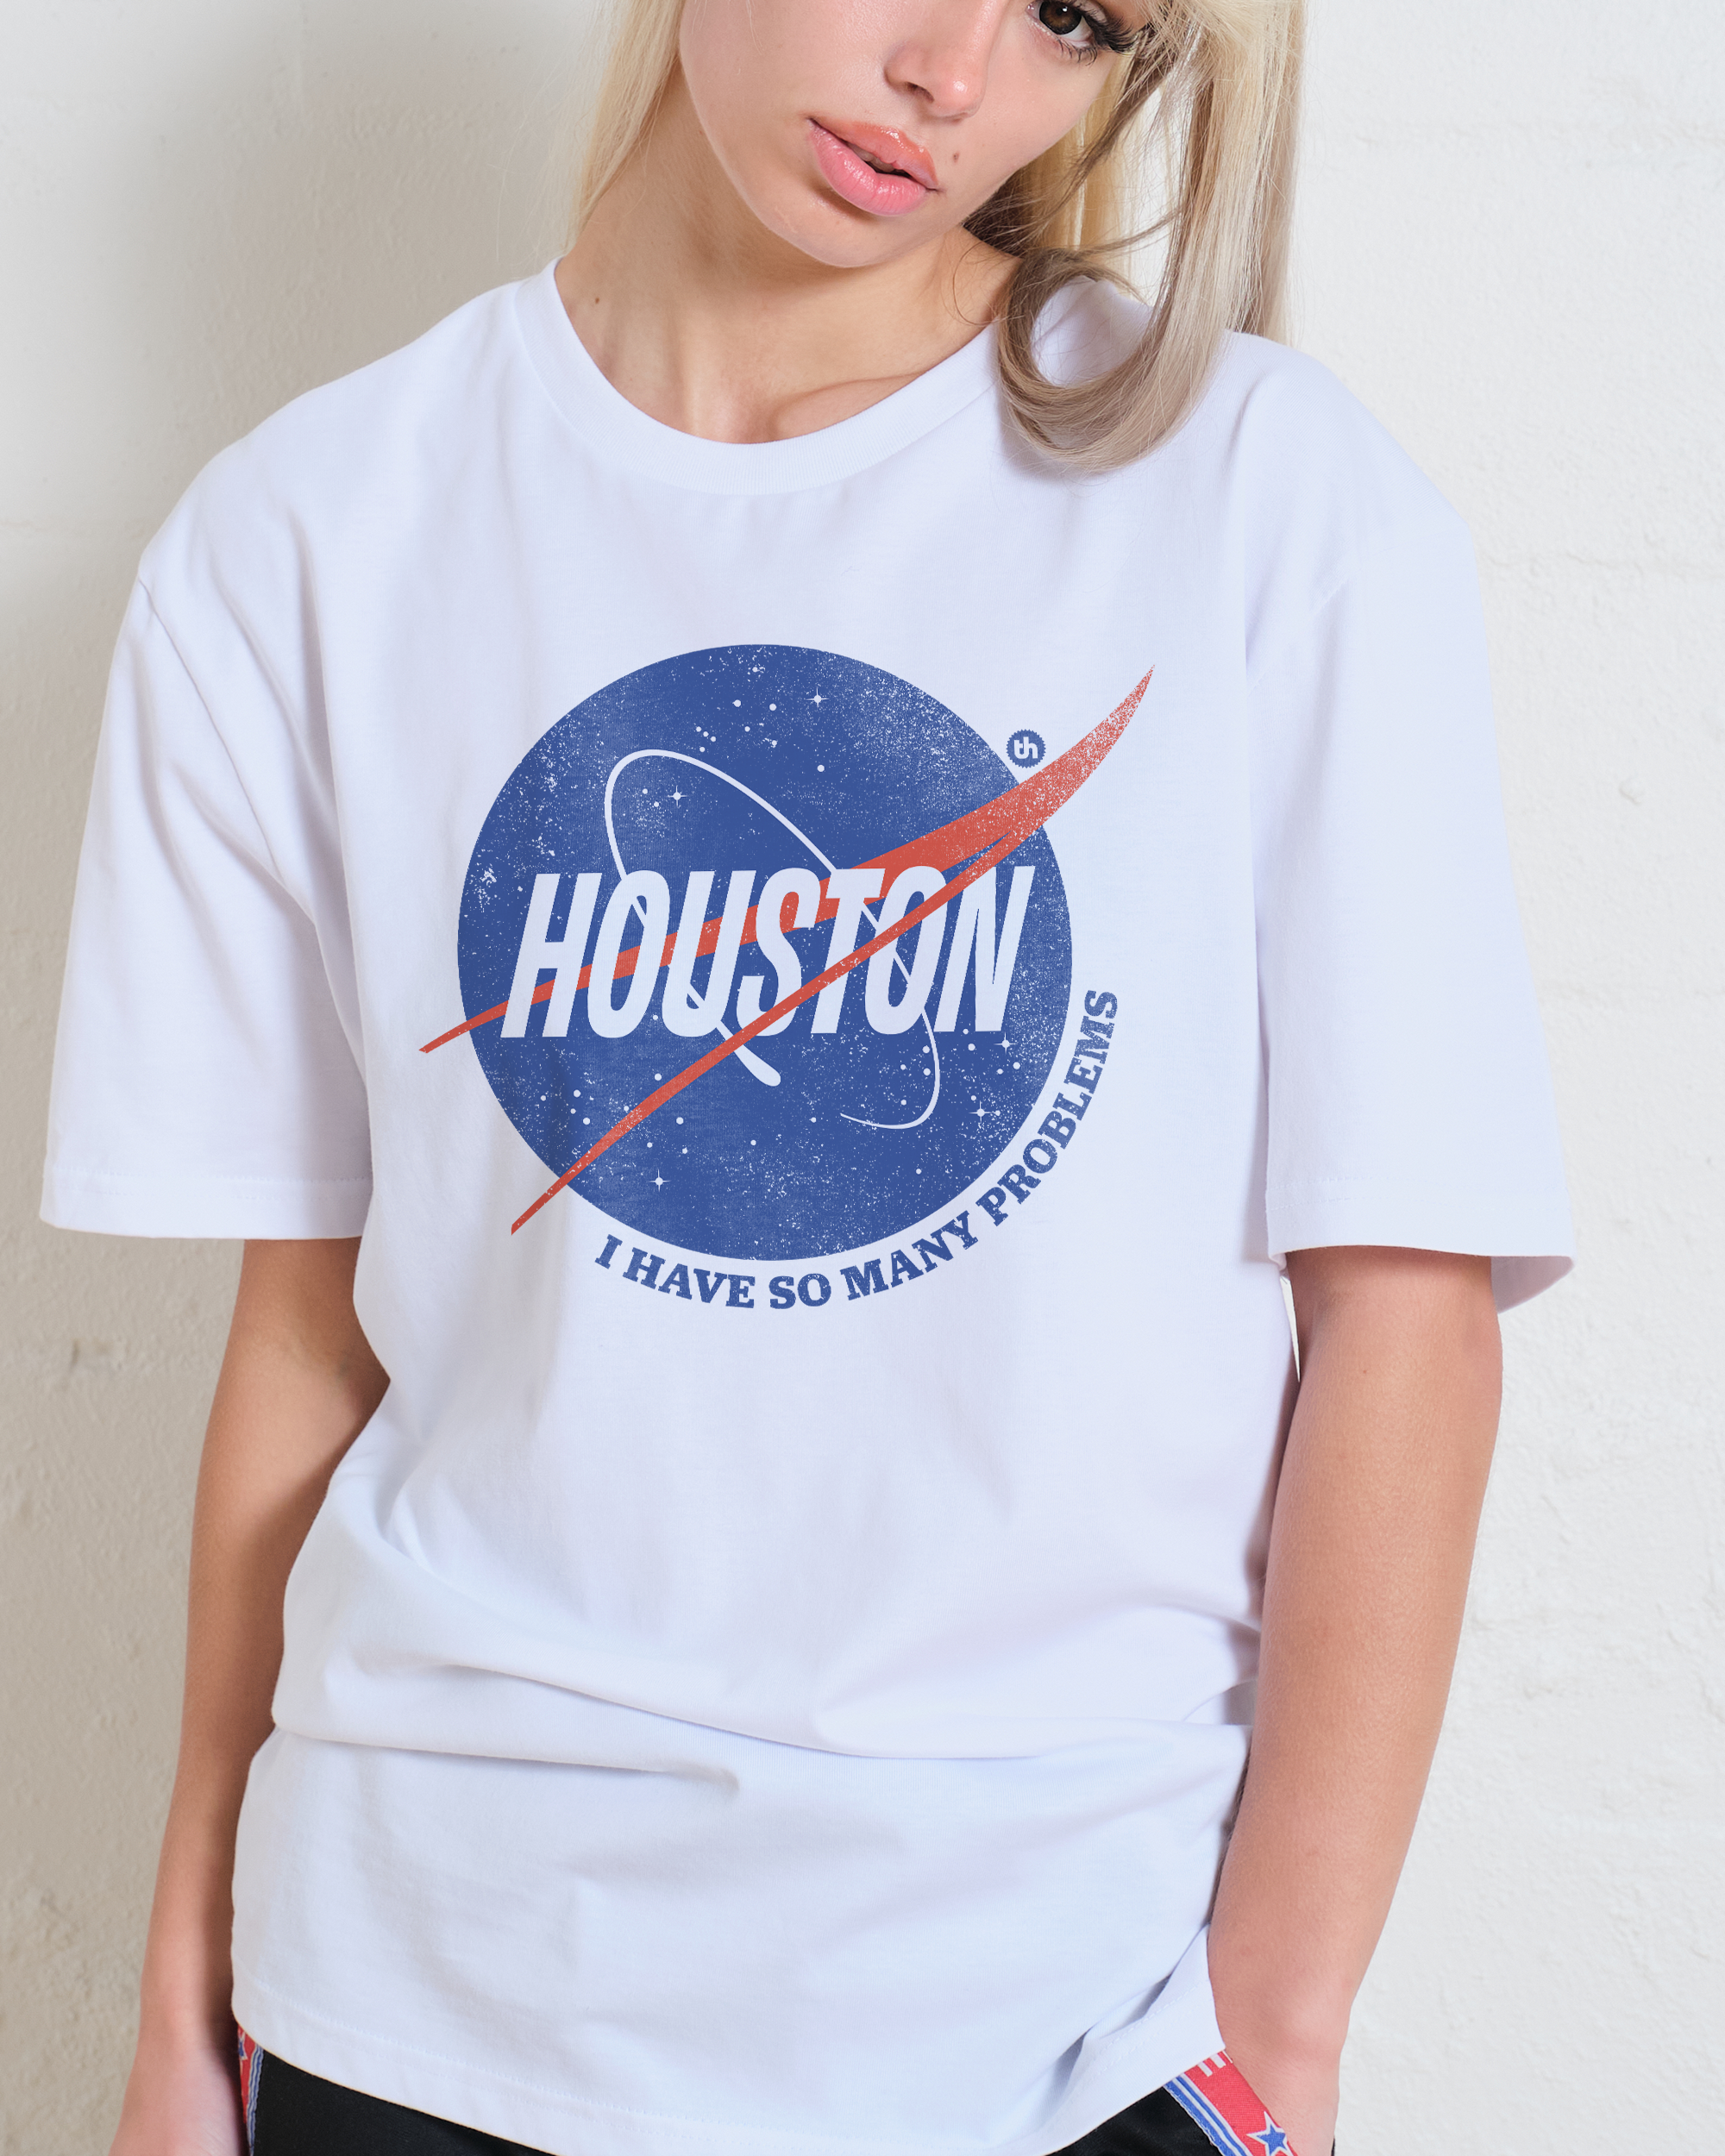 Houston I Have So Many Problems T-Shirt